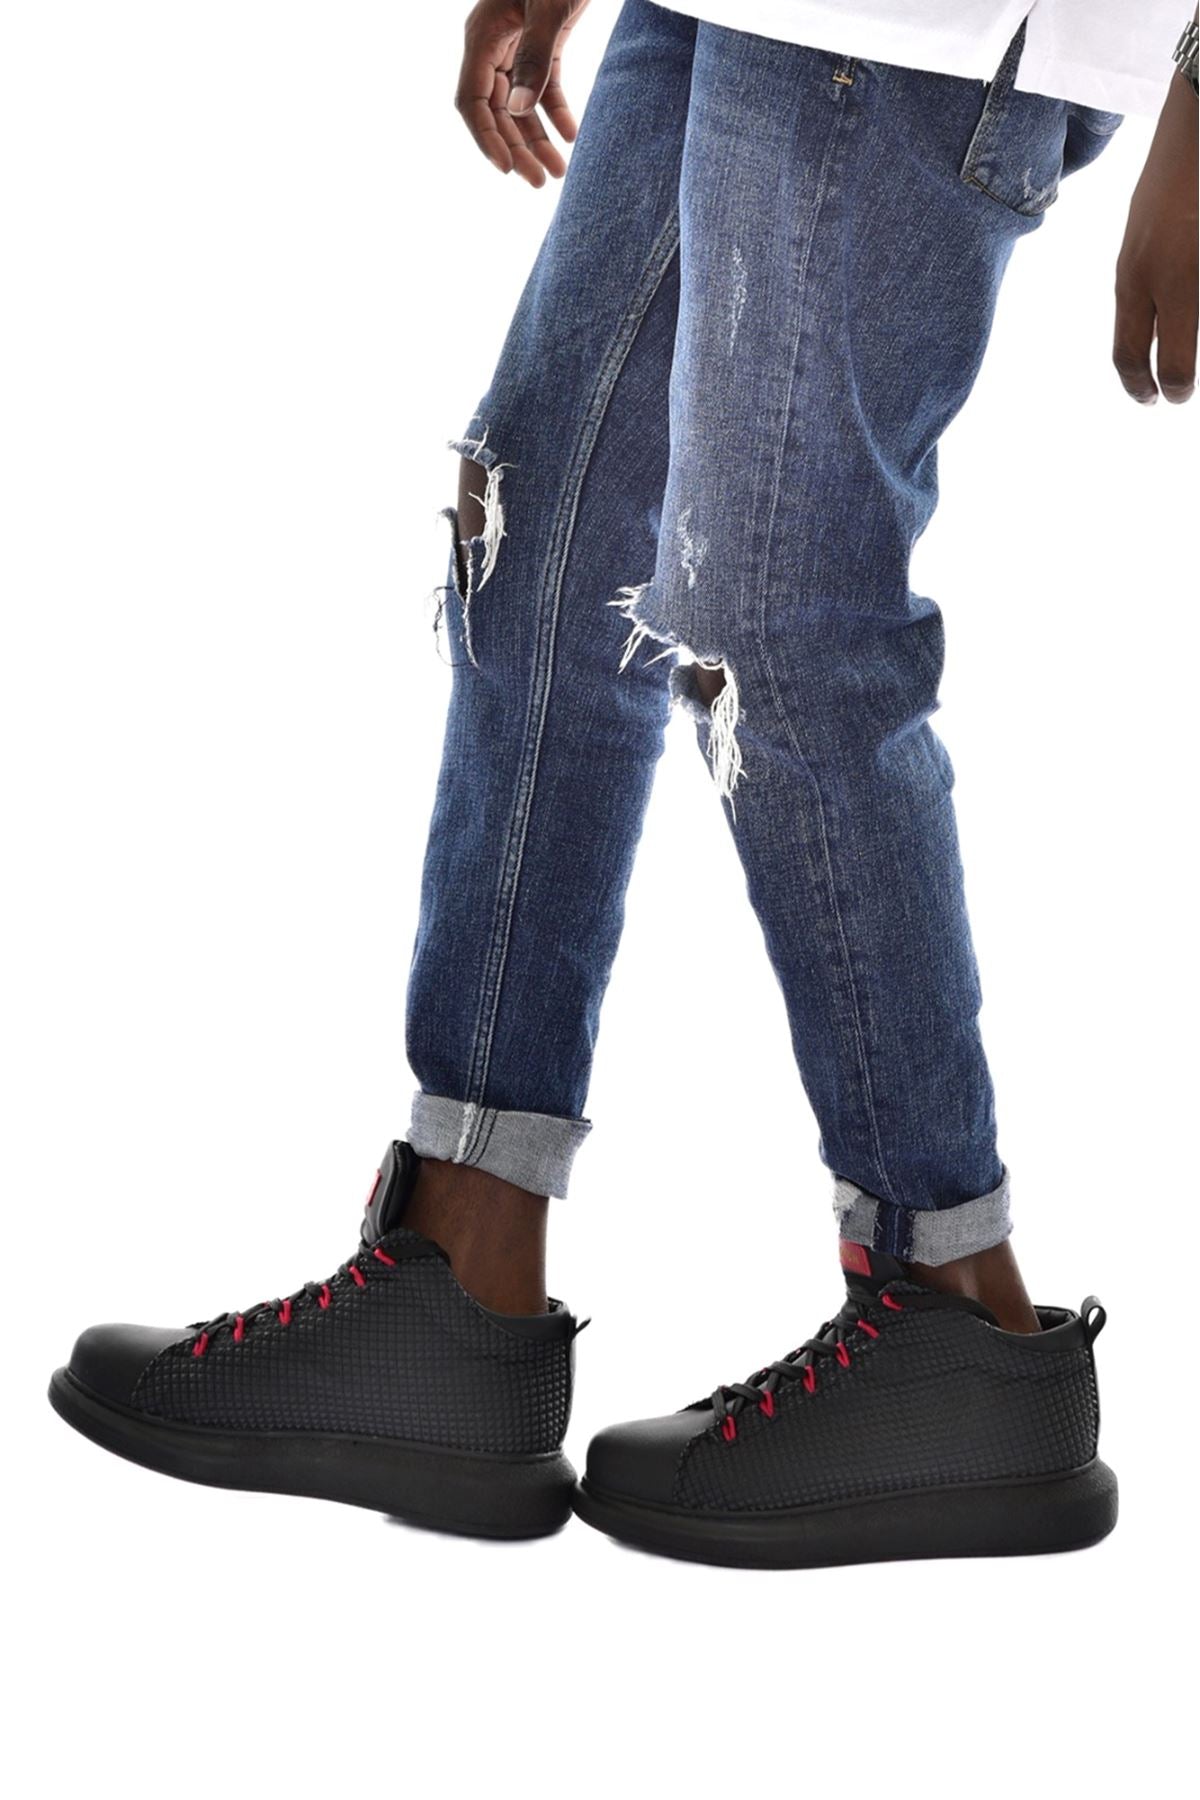 CH111 Garni ST BLACK - YELLOW men's sneakers shoes - STREETMODE™